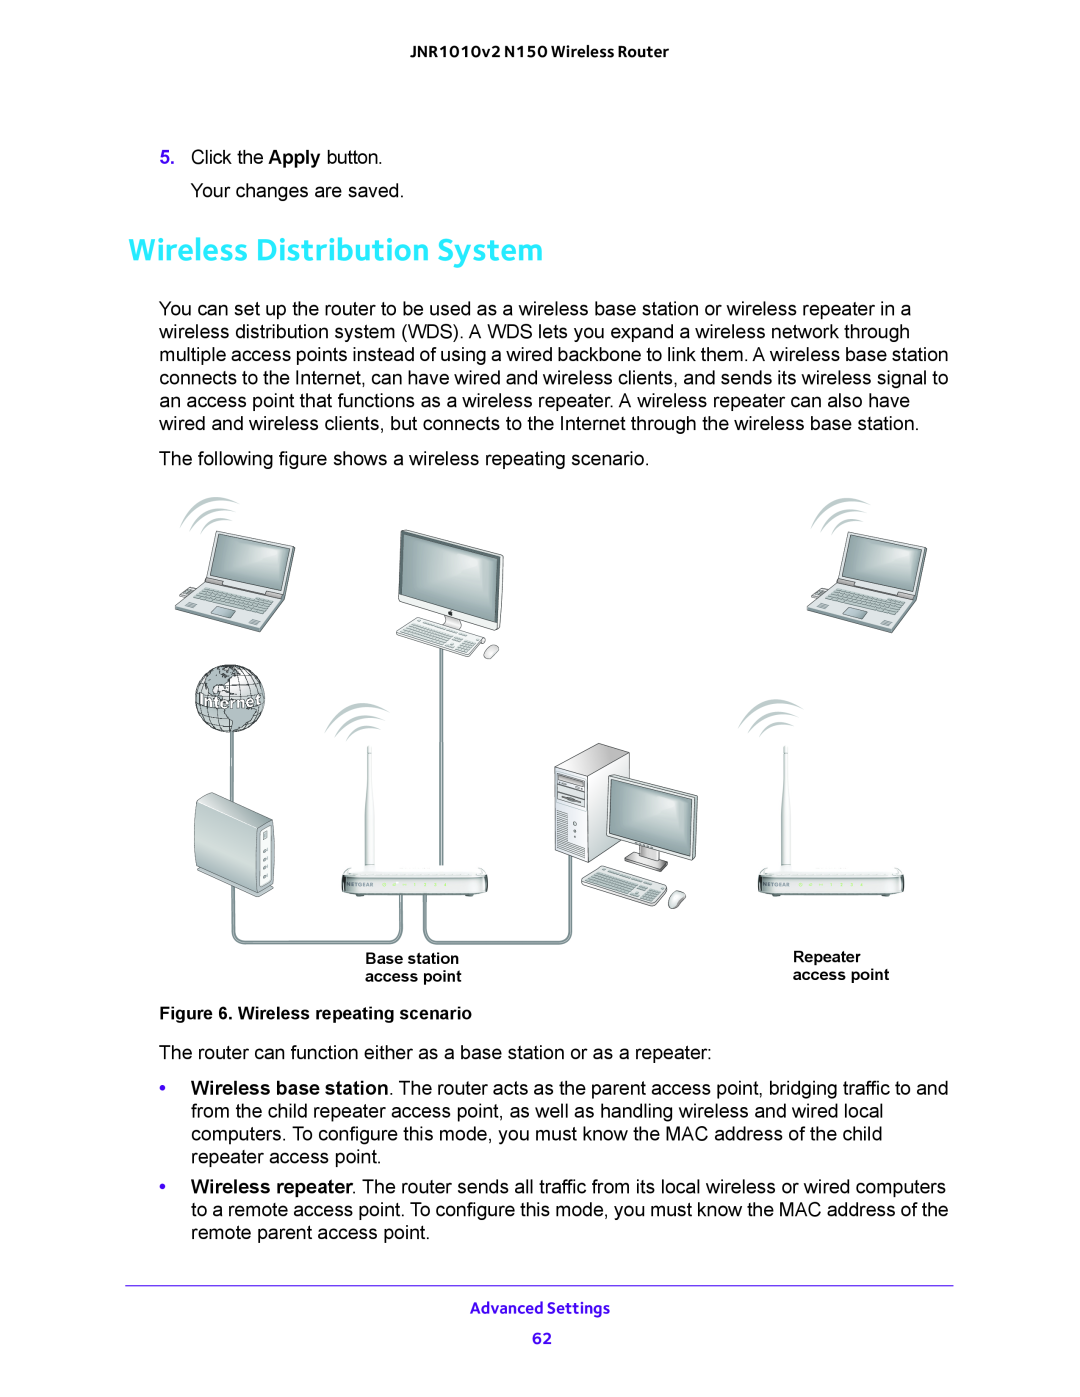 NETGEAR JNR1010V2 user manual Wireless Distribution System 